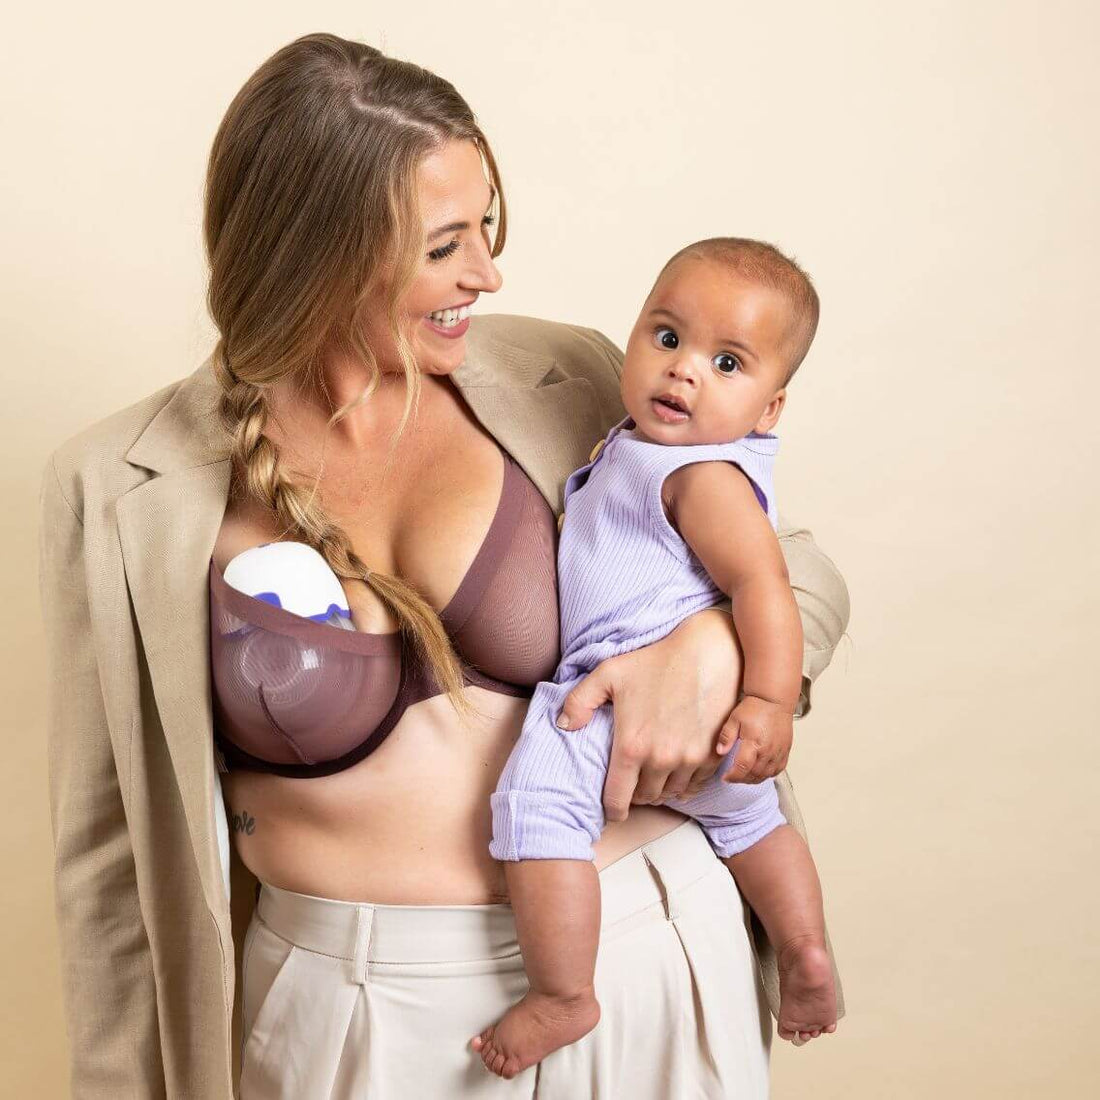 Pump review: Lansinoh Hand Pump : r/breastfeeding